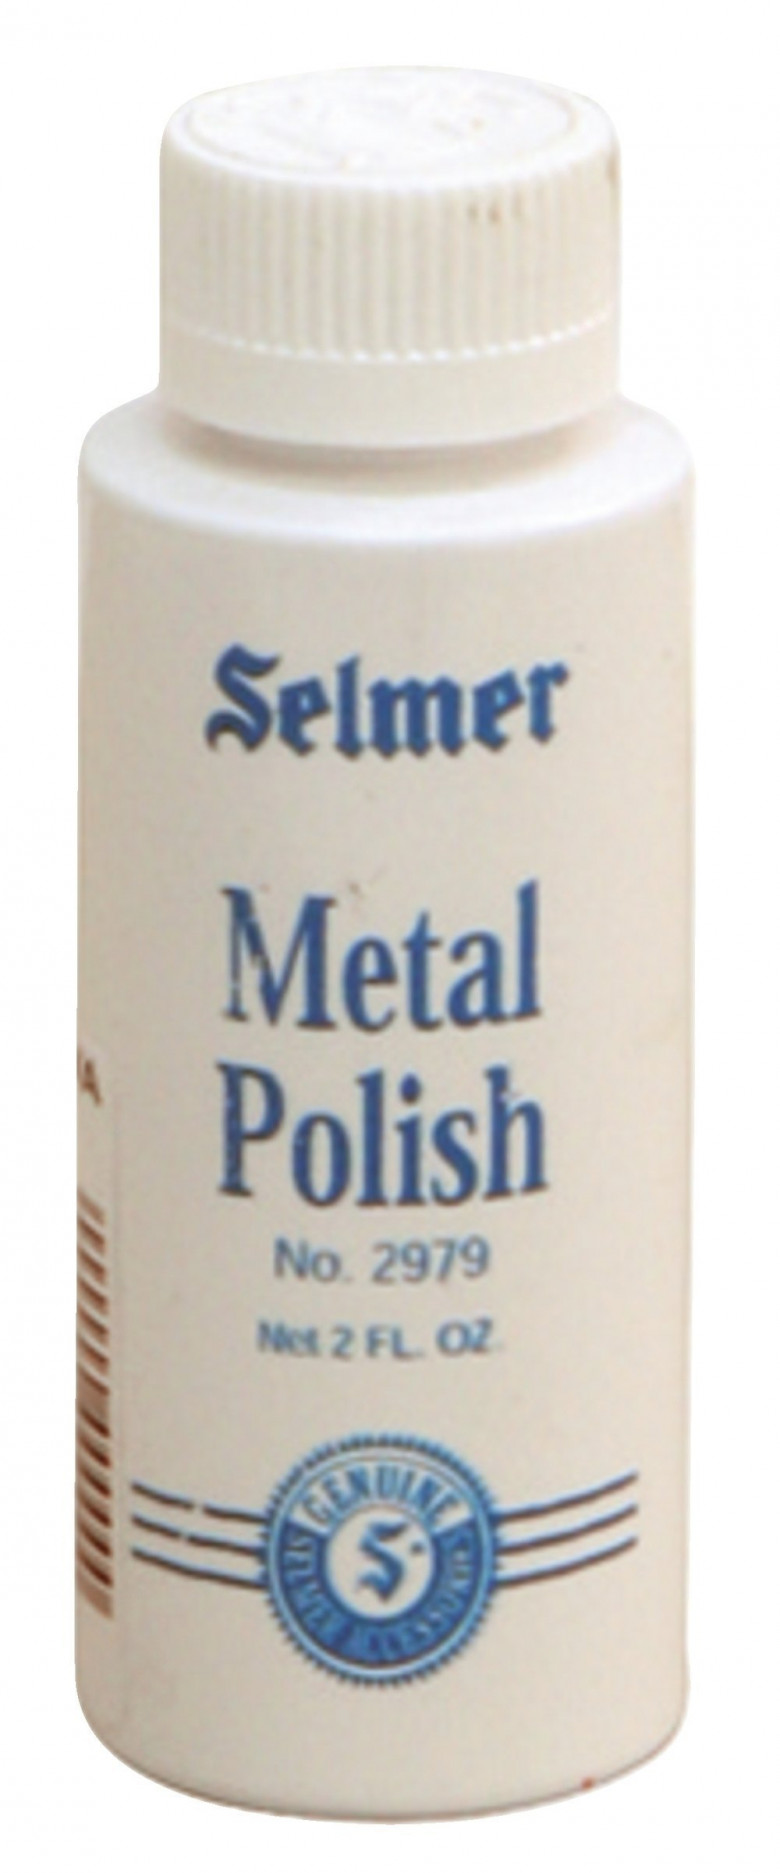 Metal Polish per pulizia metalli